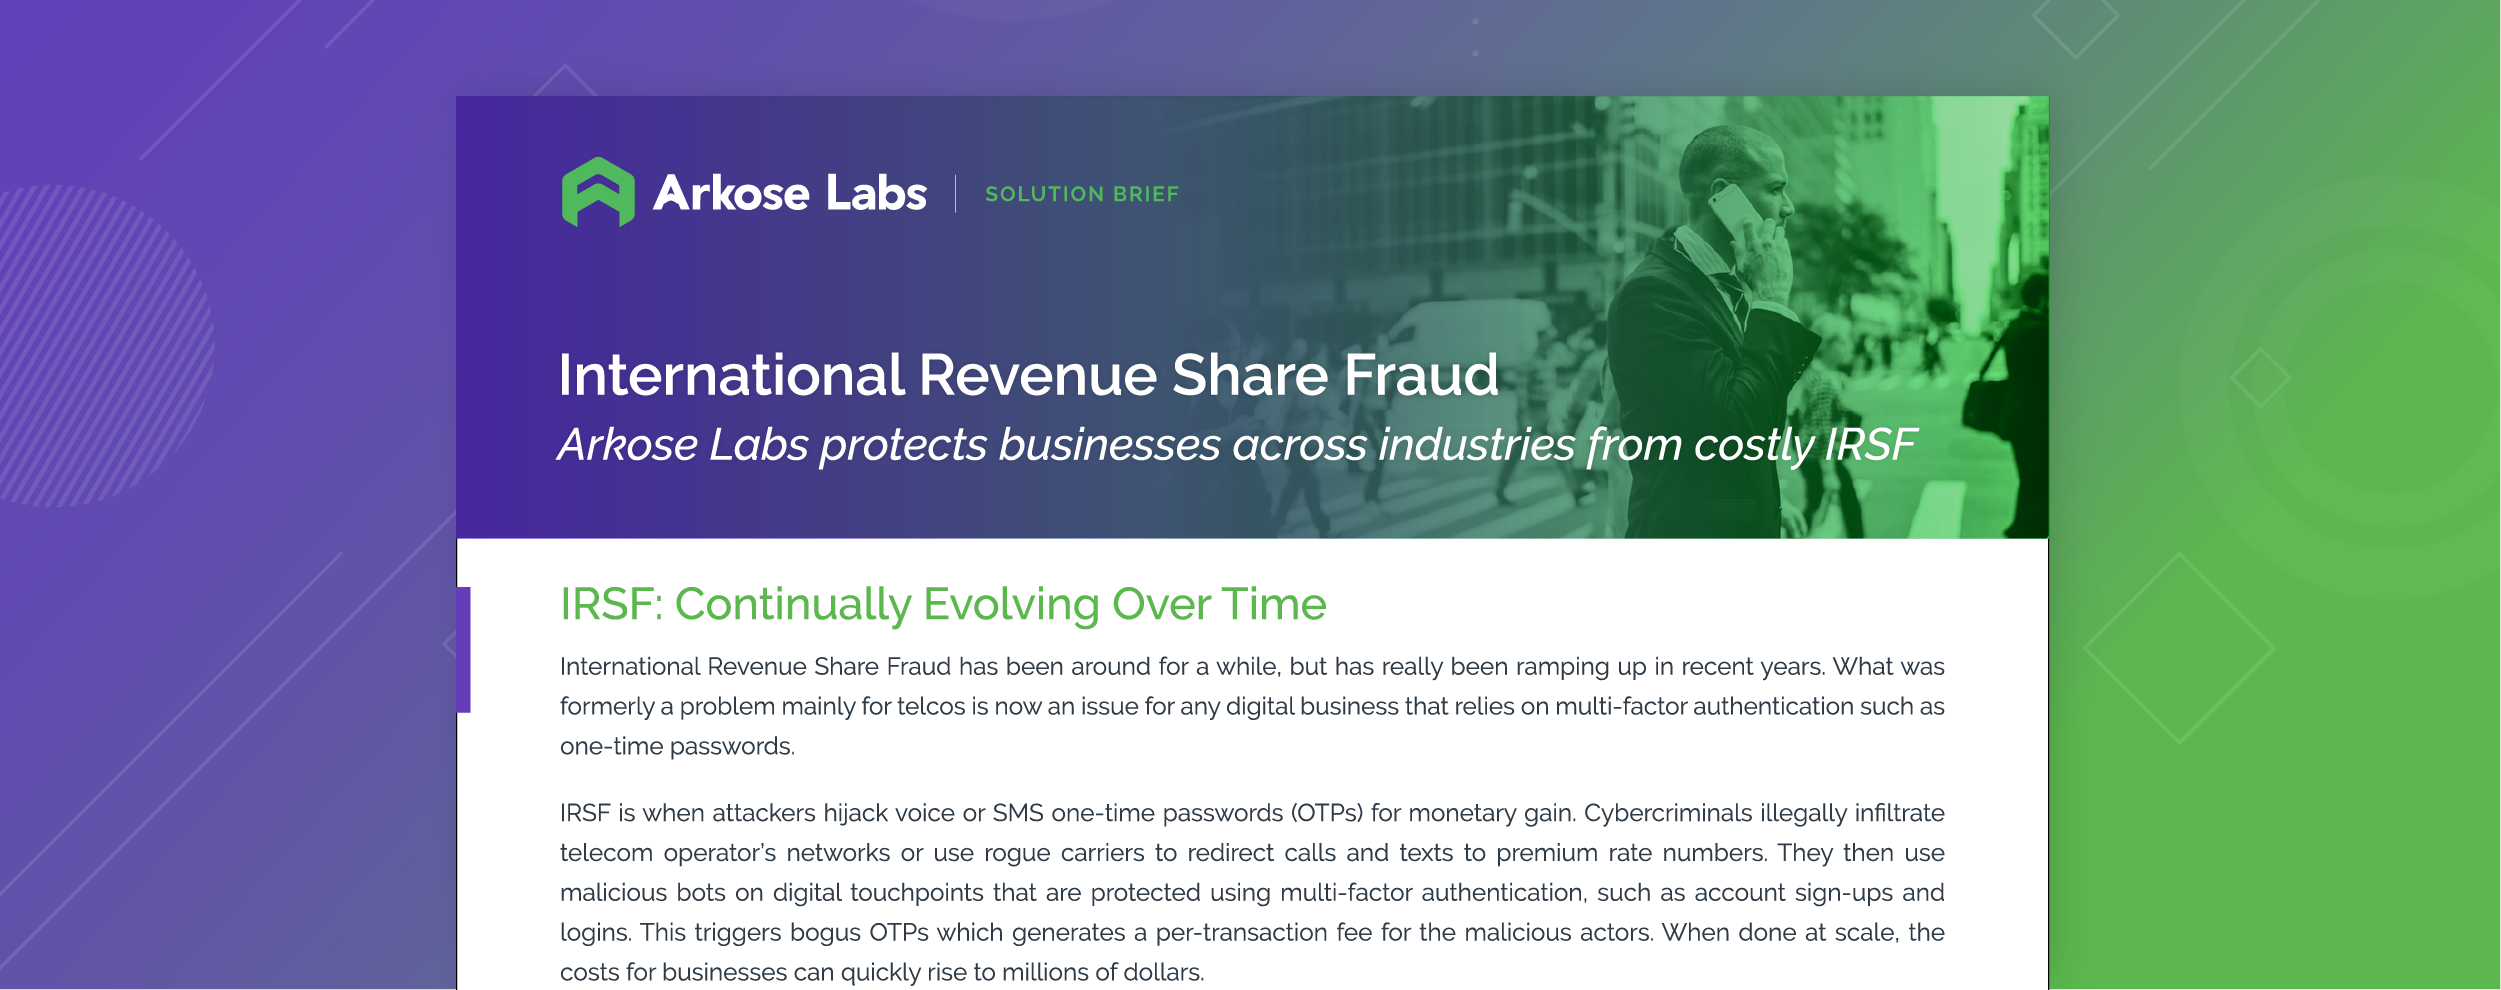 International Revenue Share Fraud solution brief